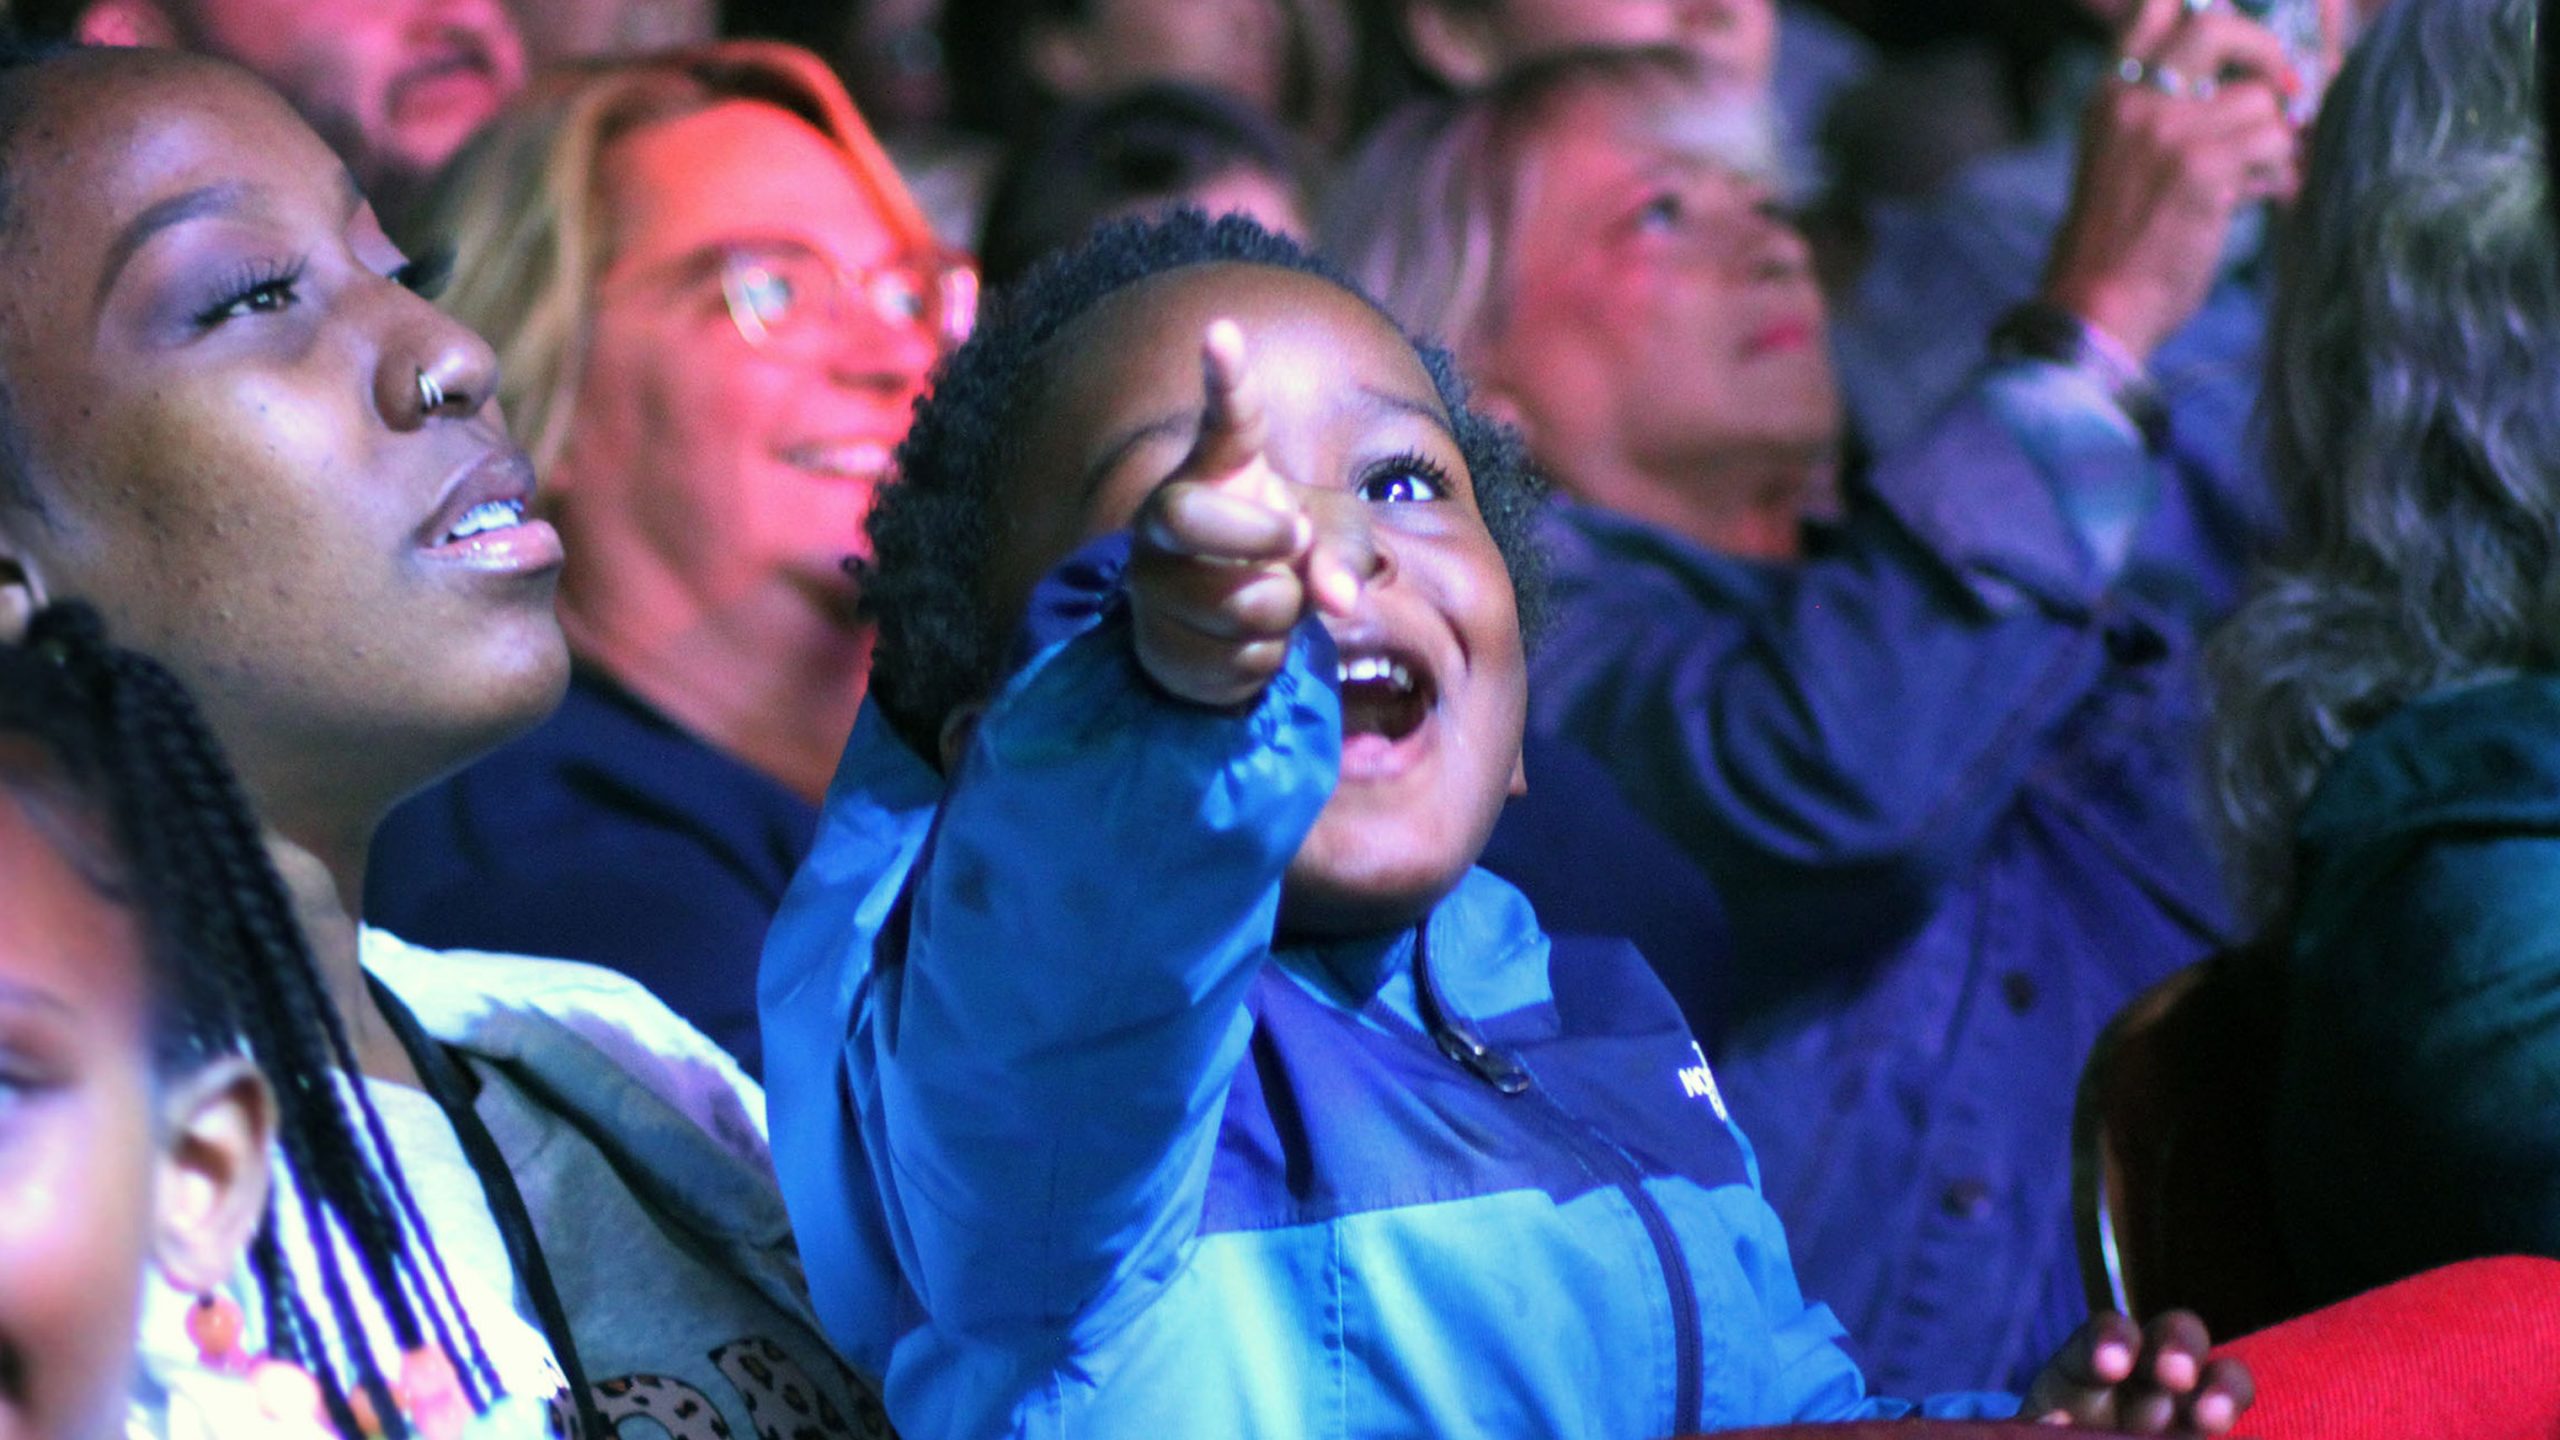 Child enjoys Gazillion Bubbles performance at The Whiting